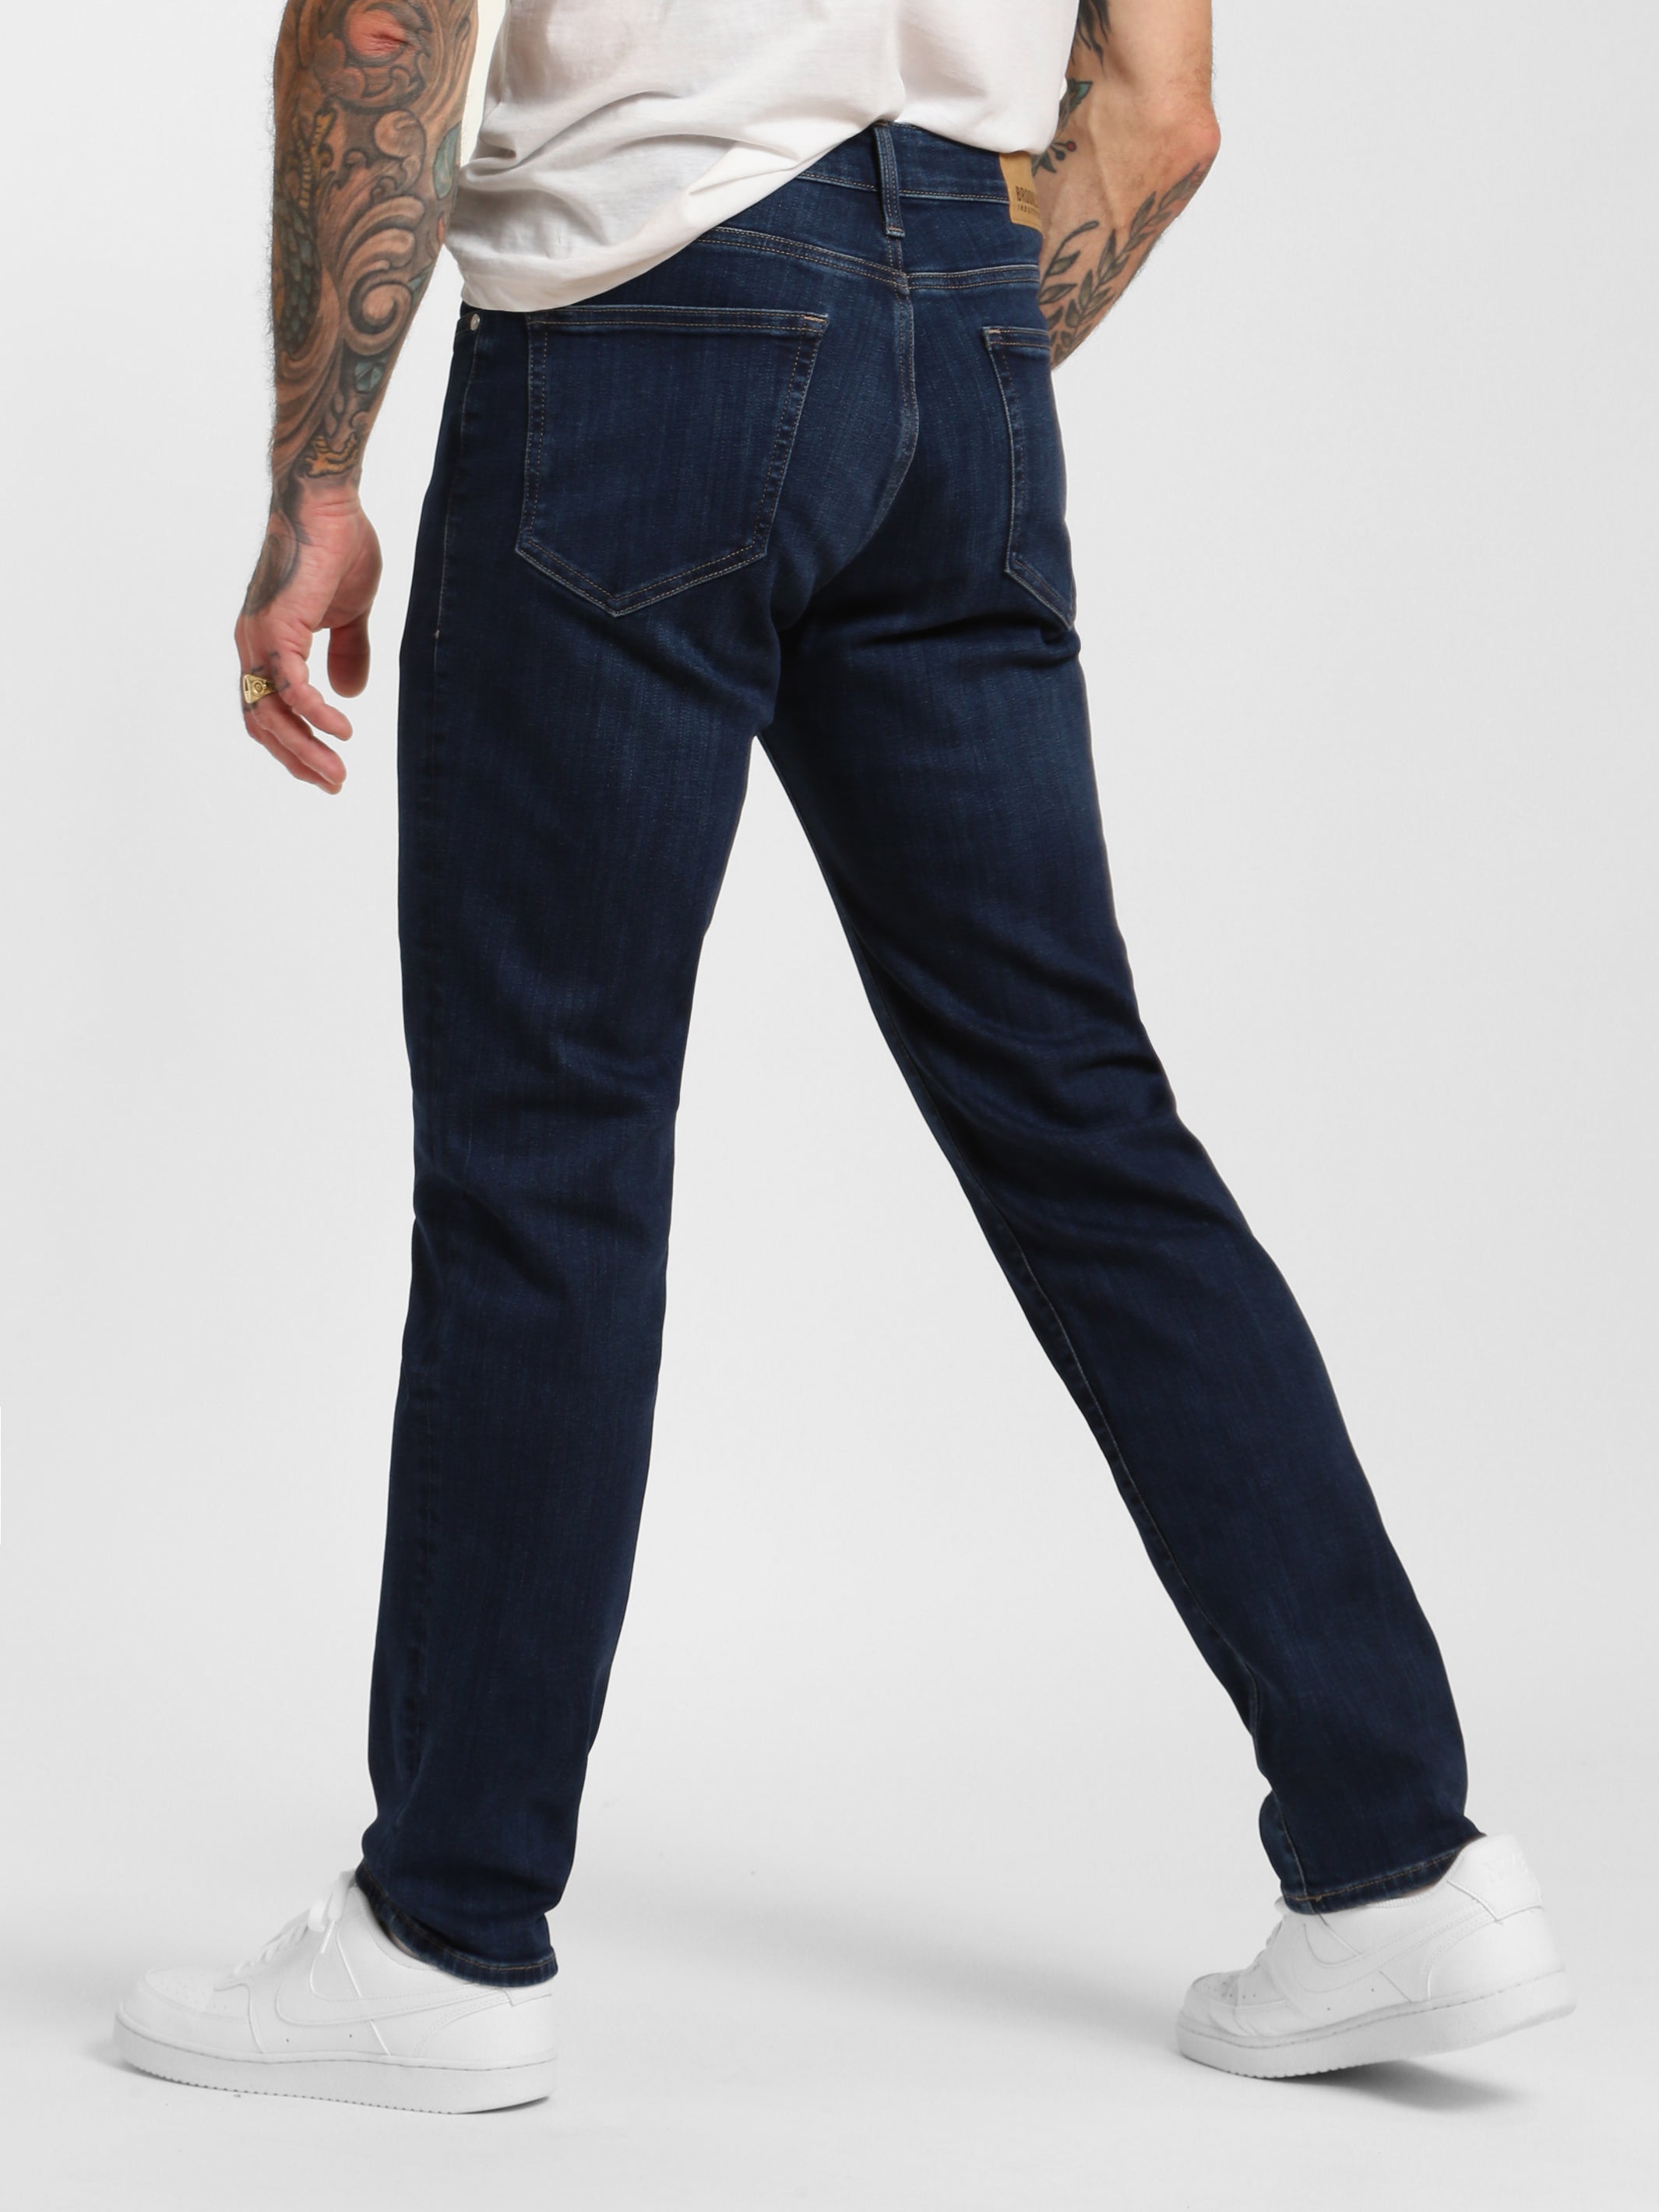 Men's Vintage Straight Jeans in Franklin Mid Blue